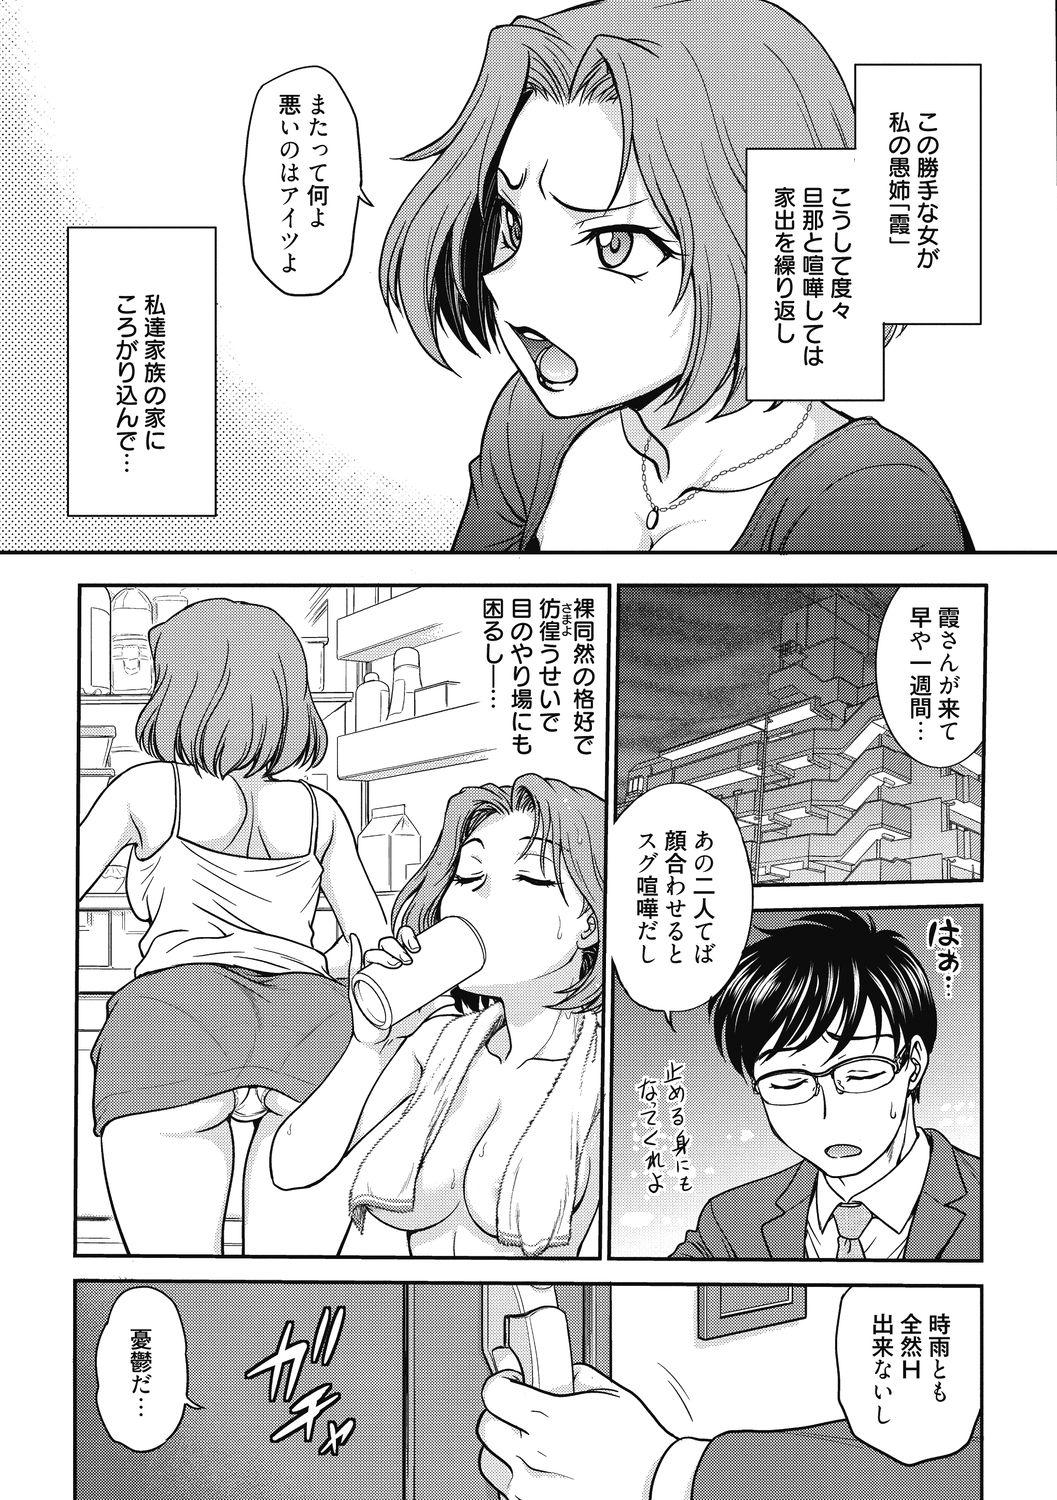 Kanojo no Shitagi o Nusundara... - I tried to steal her underwear... 98